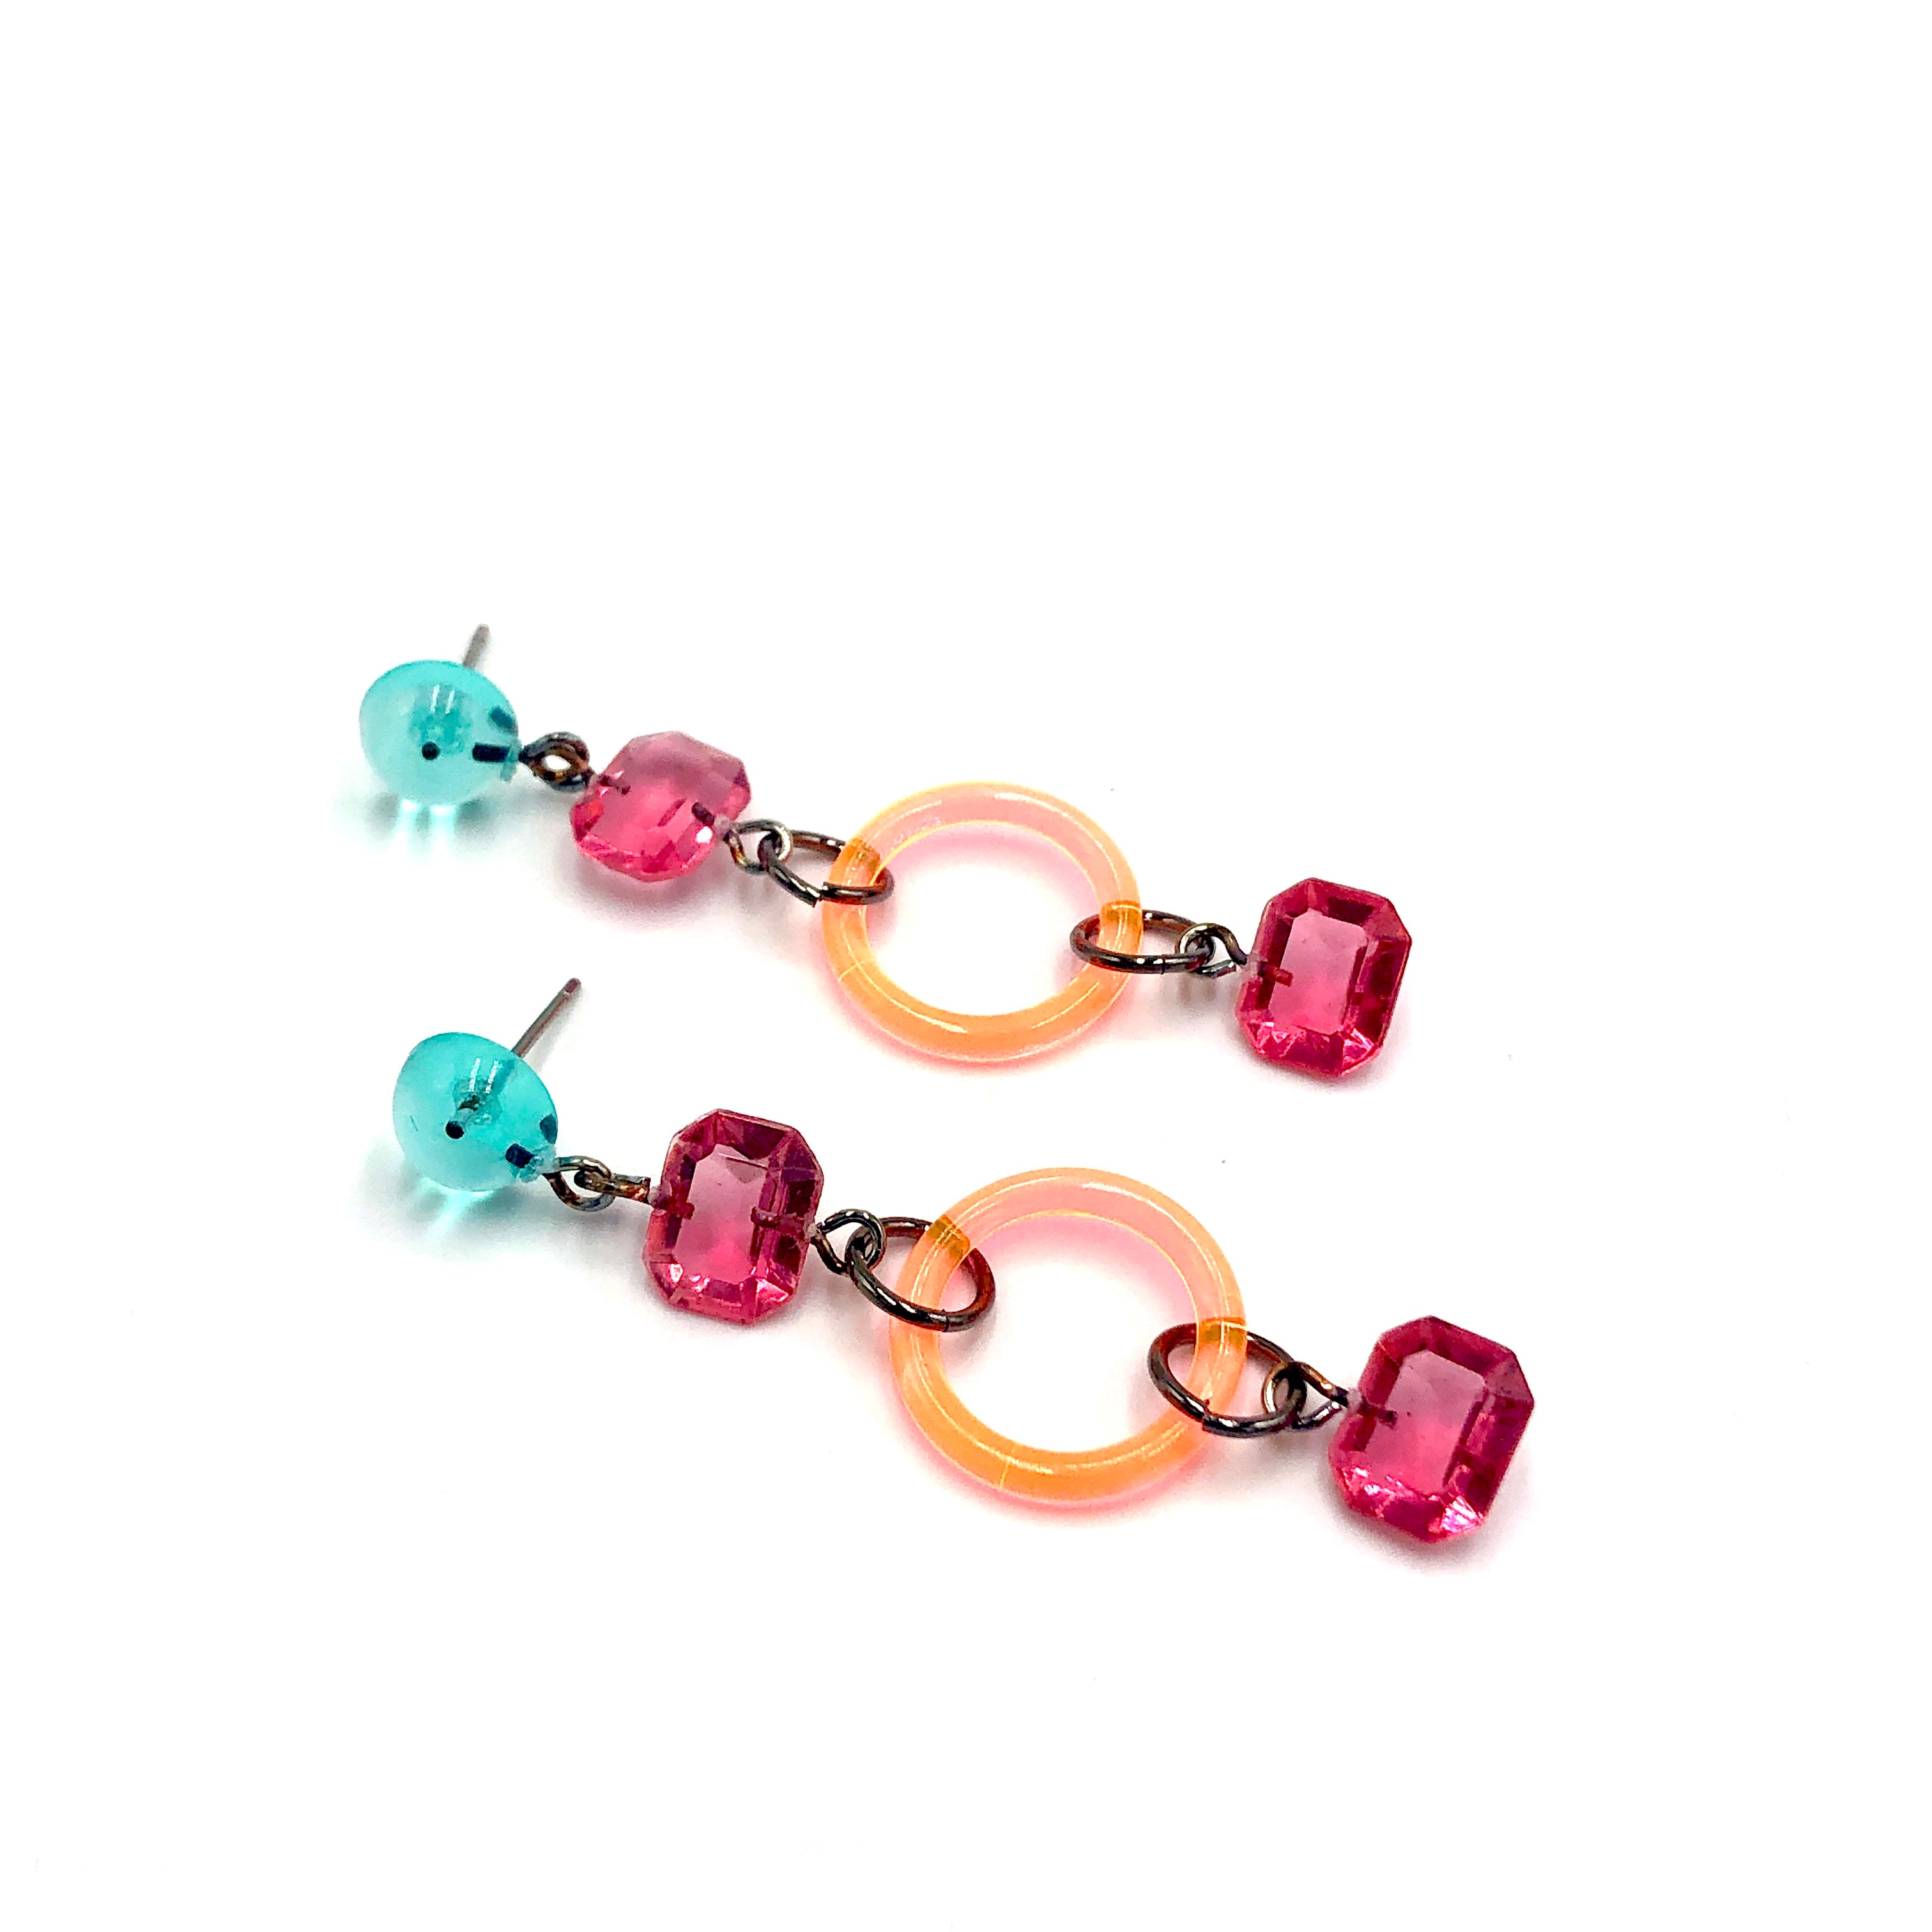 jingle earrings bright colors